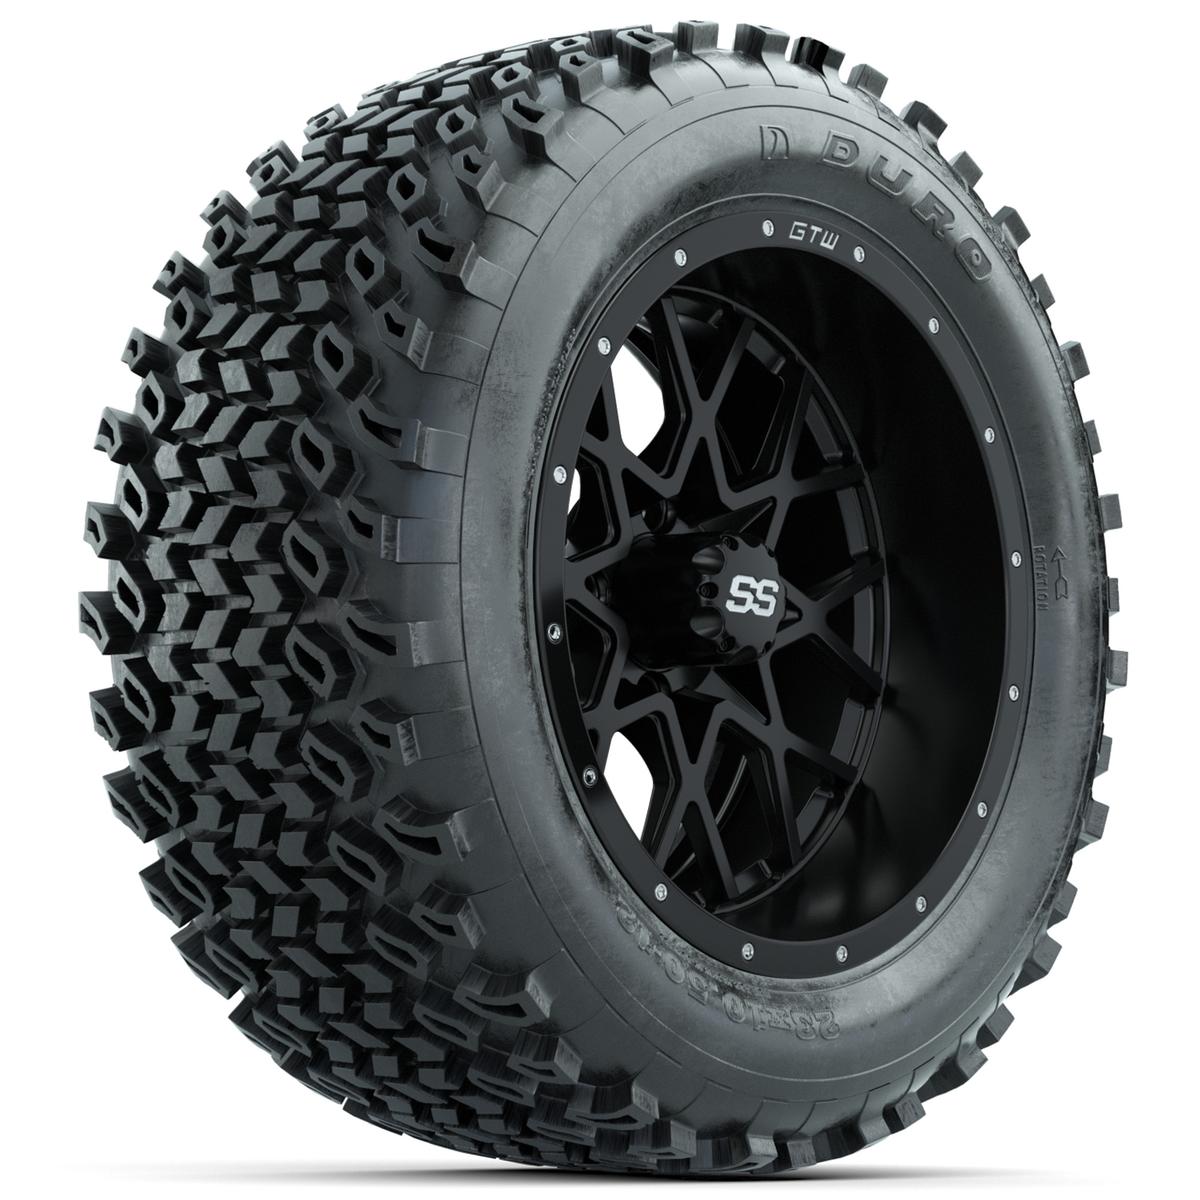 Set of (4) 14 in GTW Vortex Wheels with 23x10-14 Duro Desert All-Terrain Tires